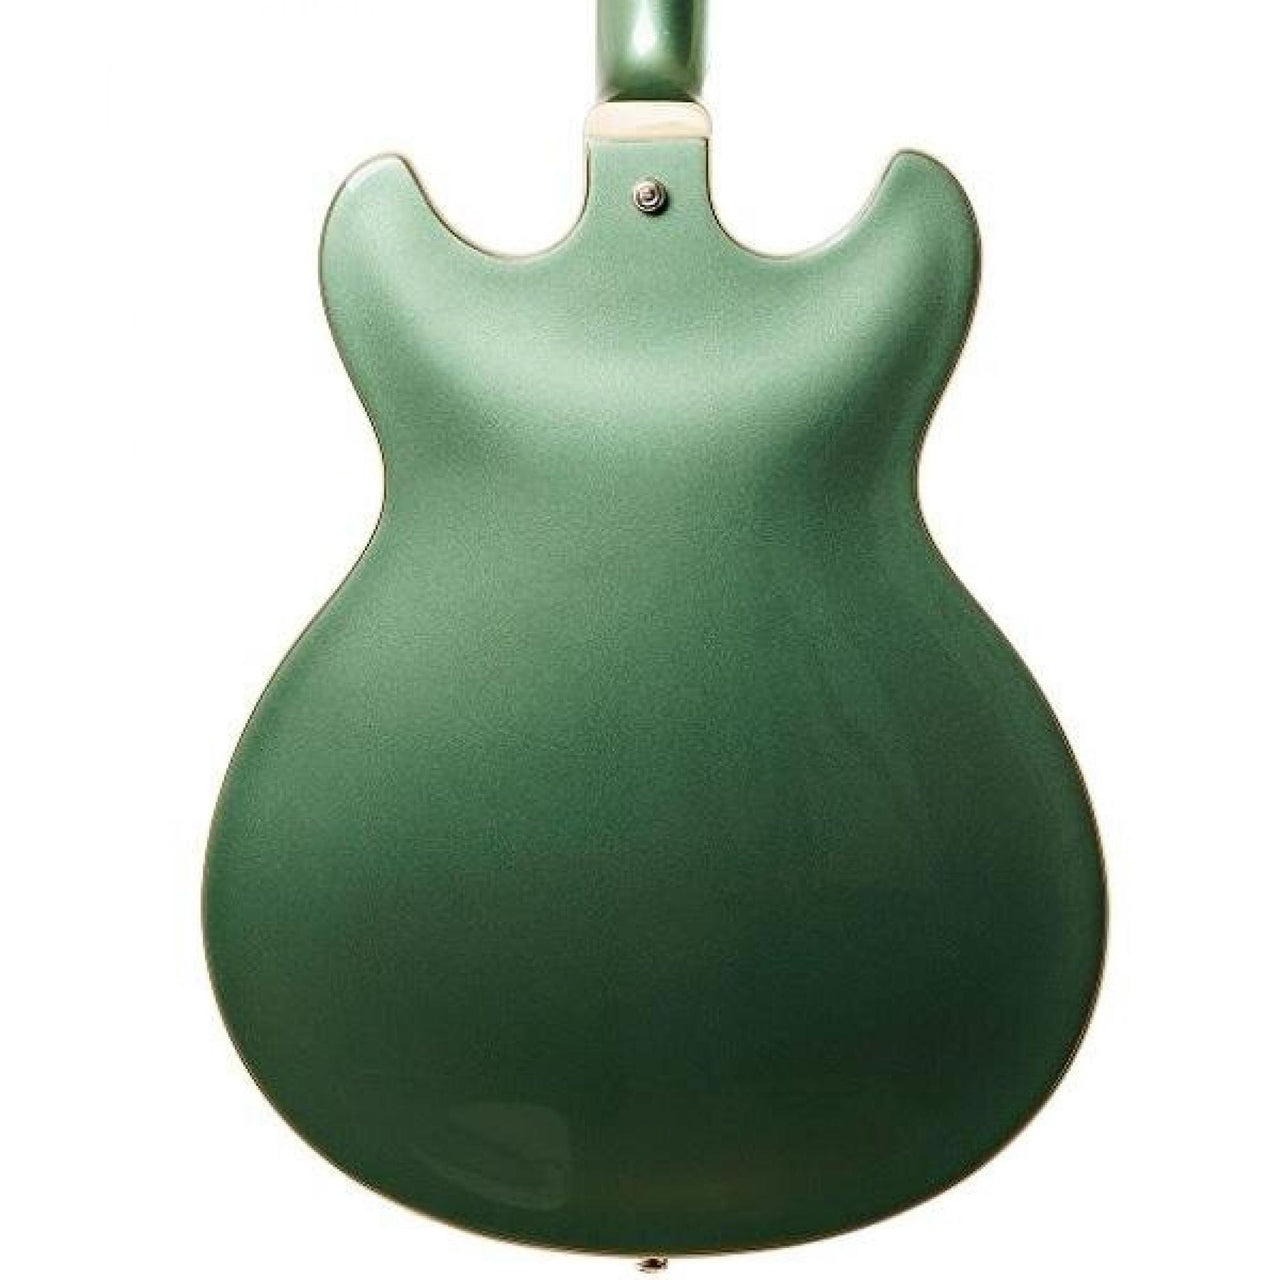 Guitarra Electrica Ibanez Artcore Verde Olivo Metalico, As73-olm